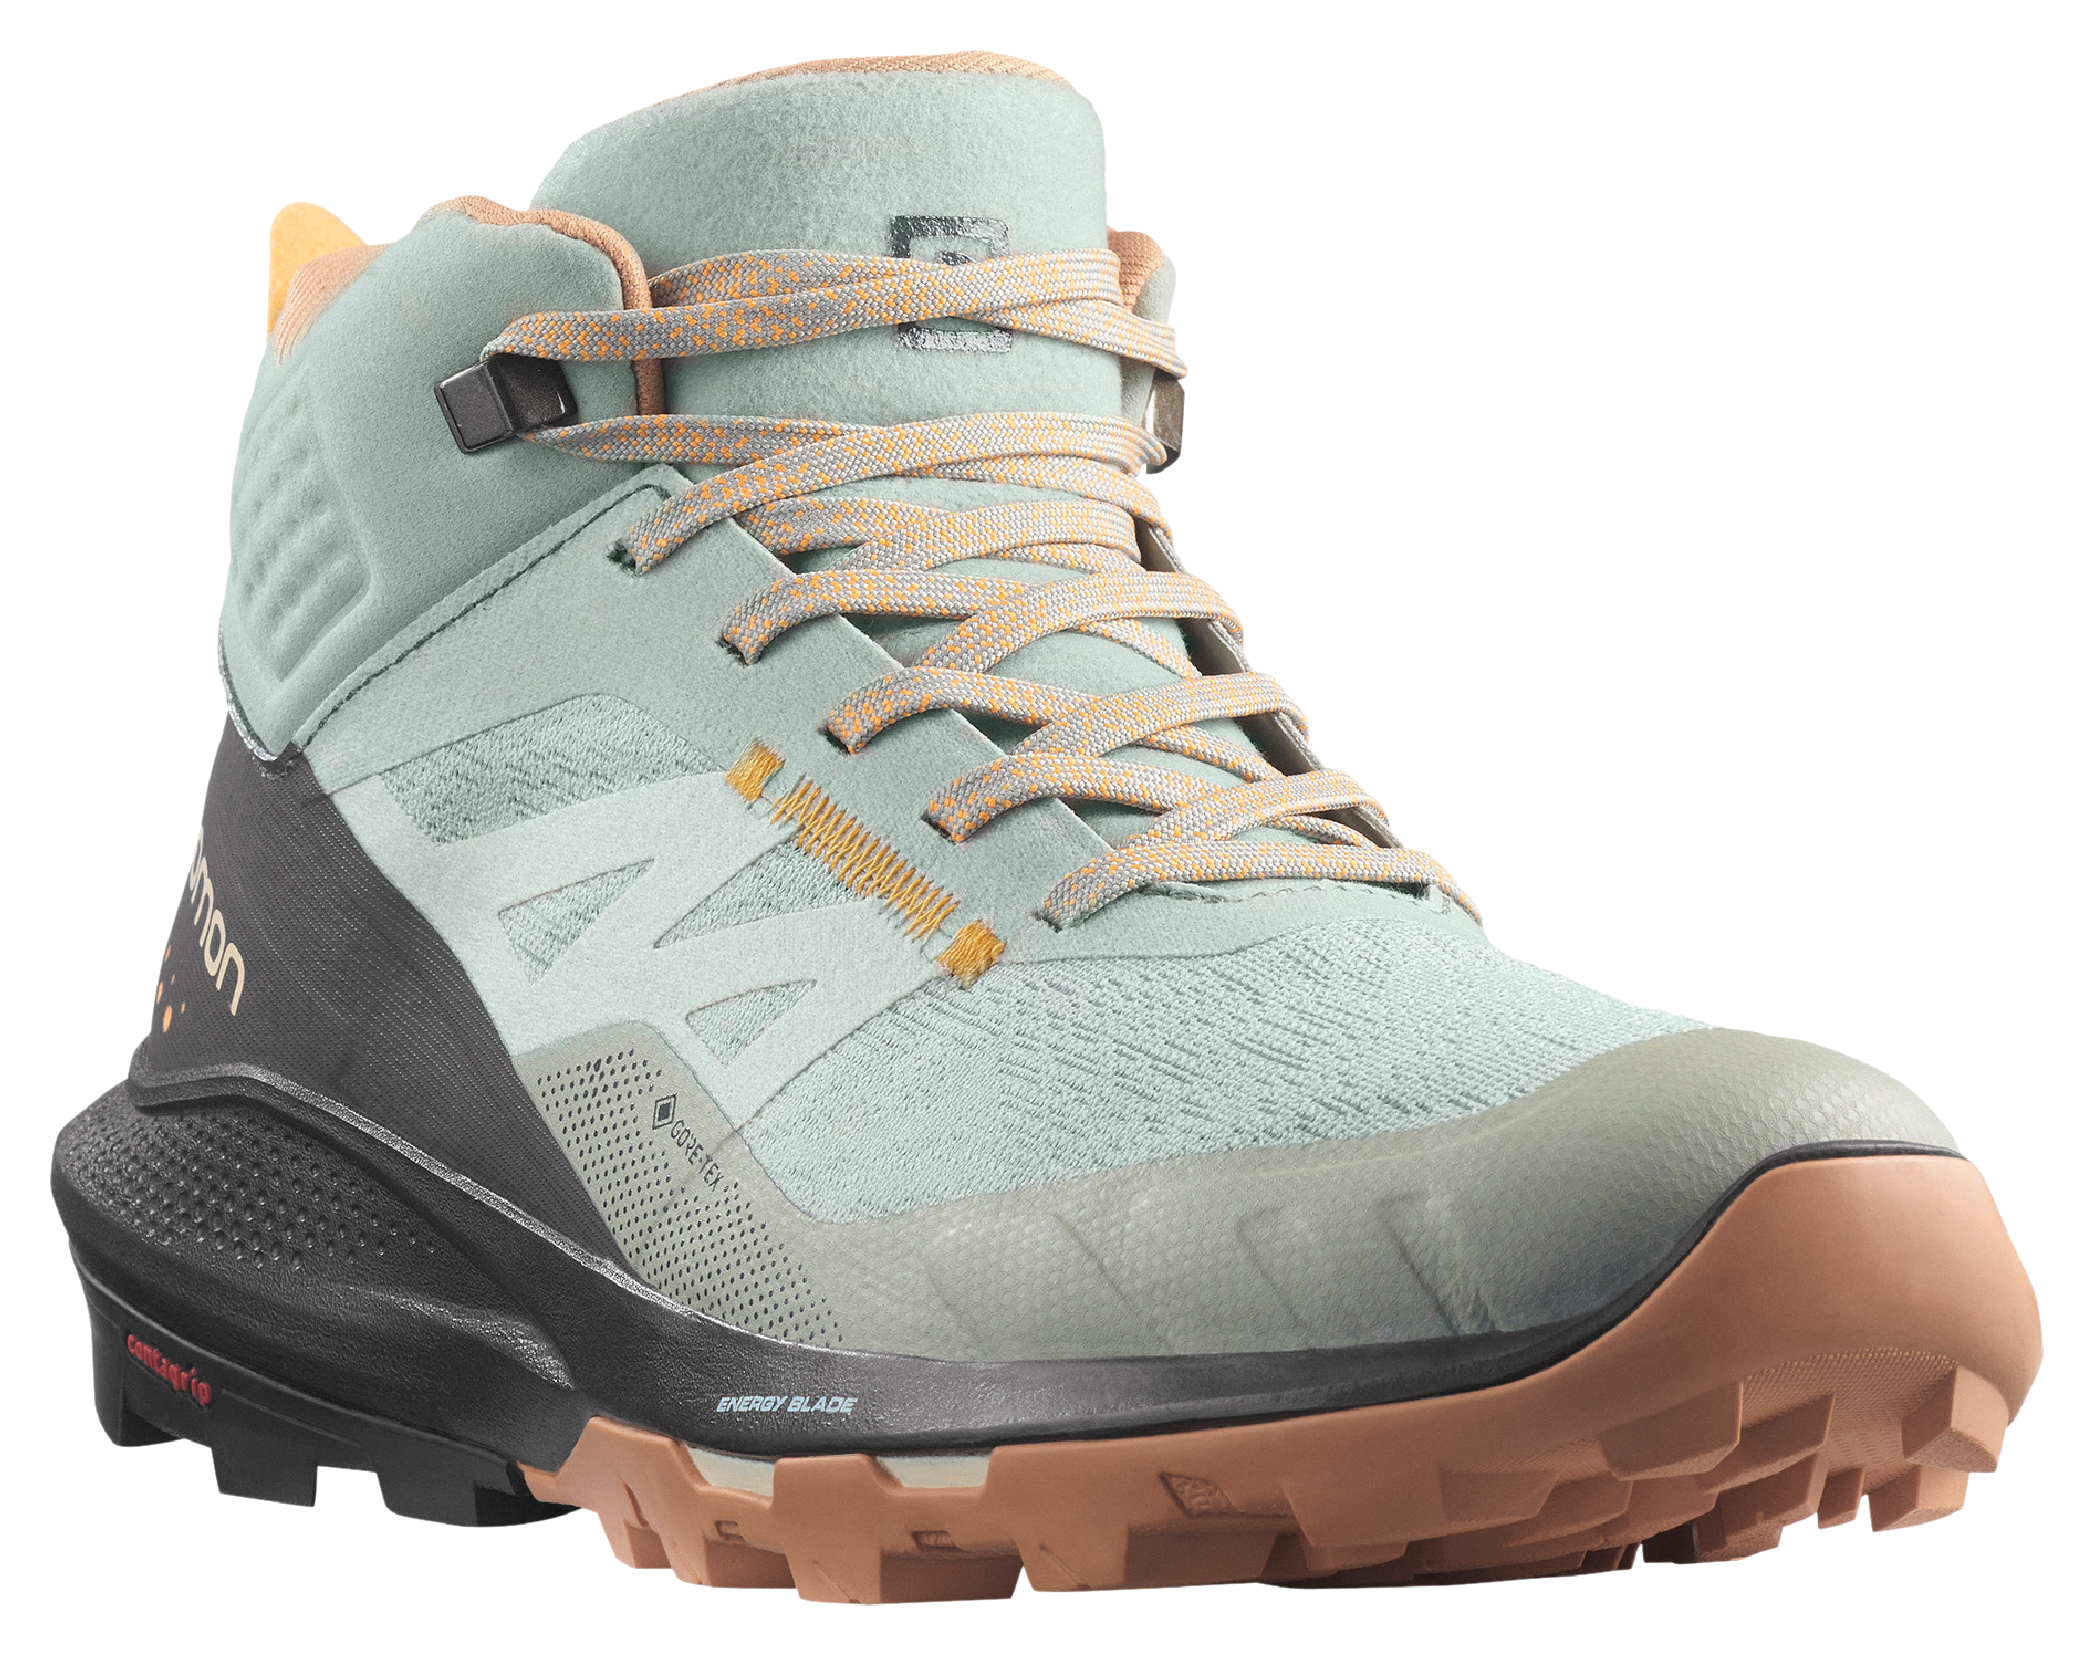 Salomon Outpulse Mid GORE-TEX Hiking Boots for Ladies - Wrought Iron/Ebony/Blaze Orange - 8M